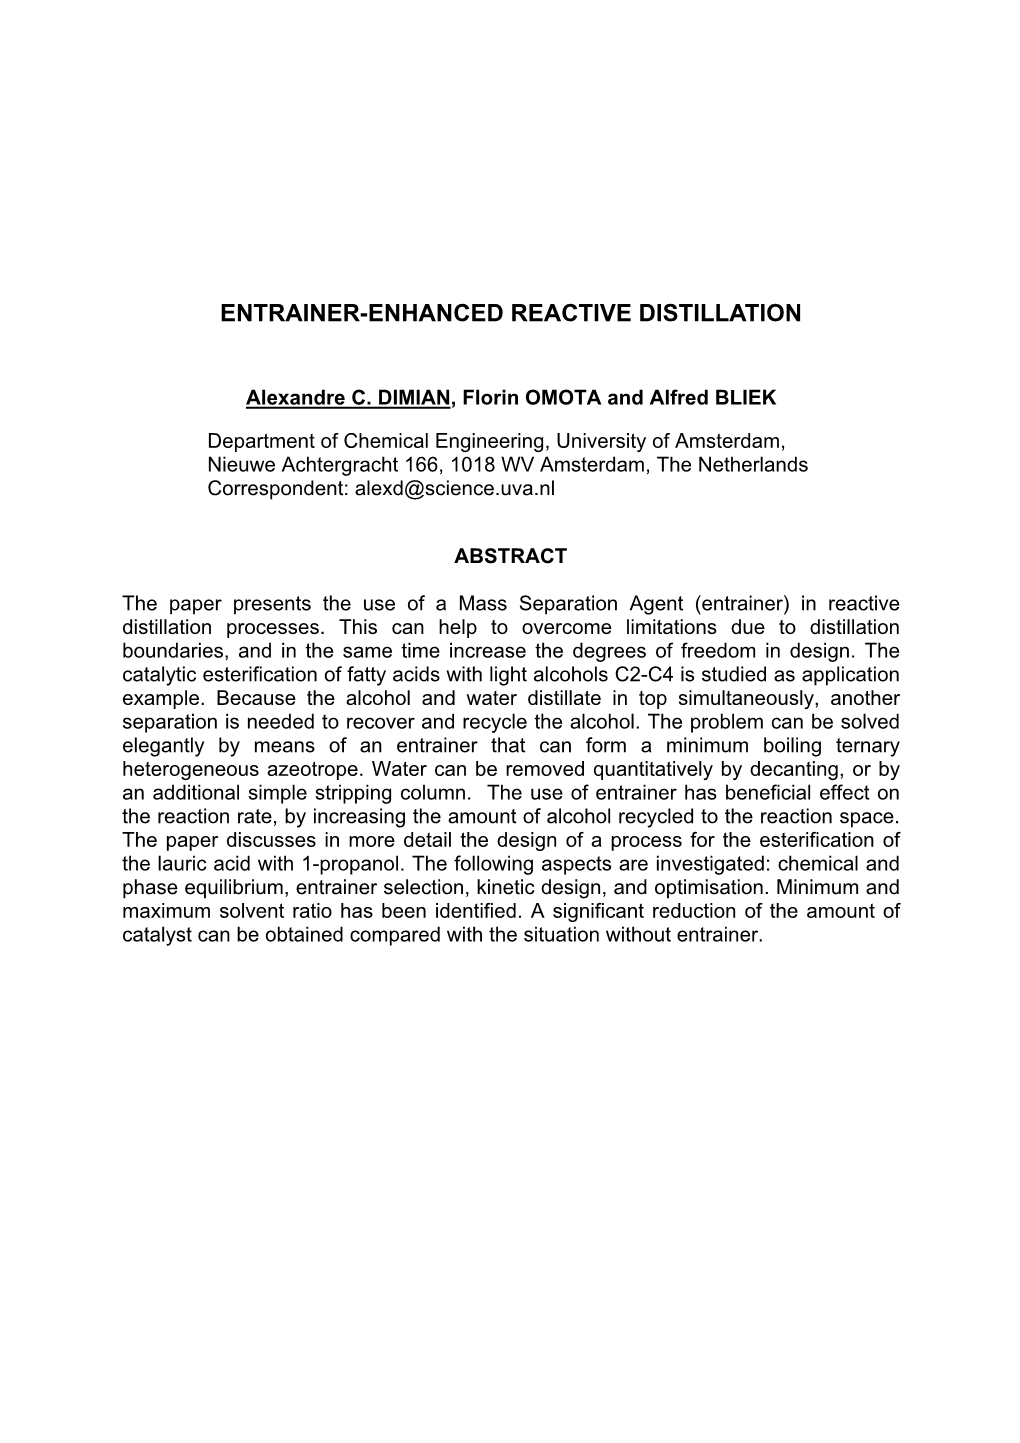 Entrainer-Enhanced Reactive Distillation